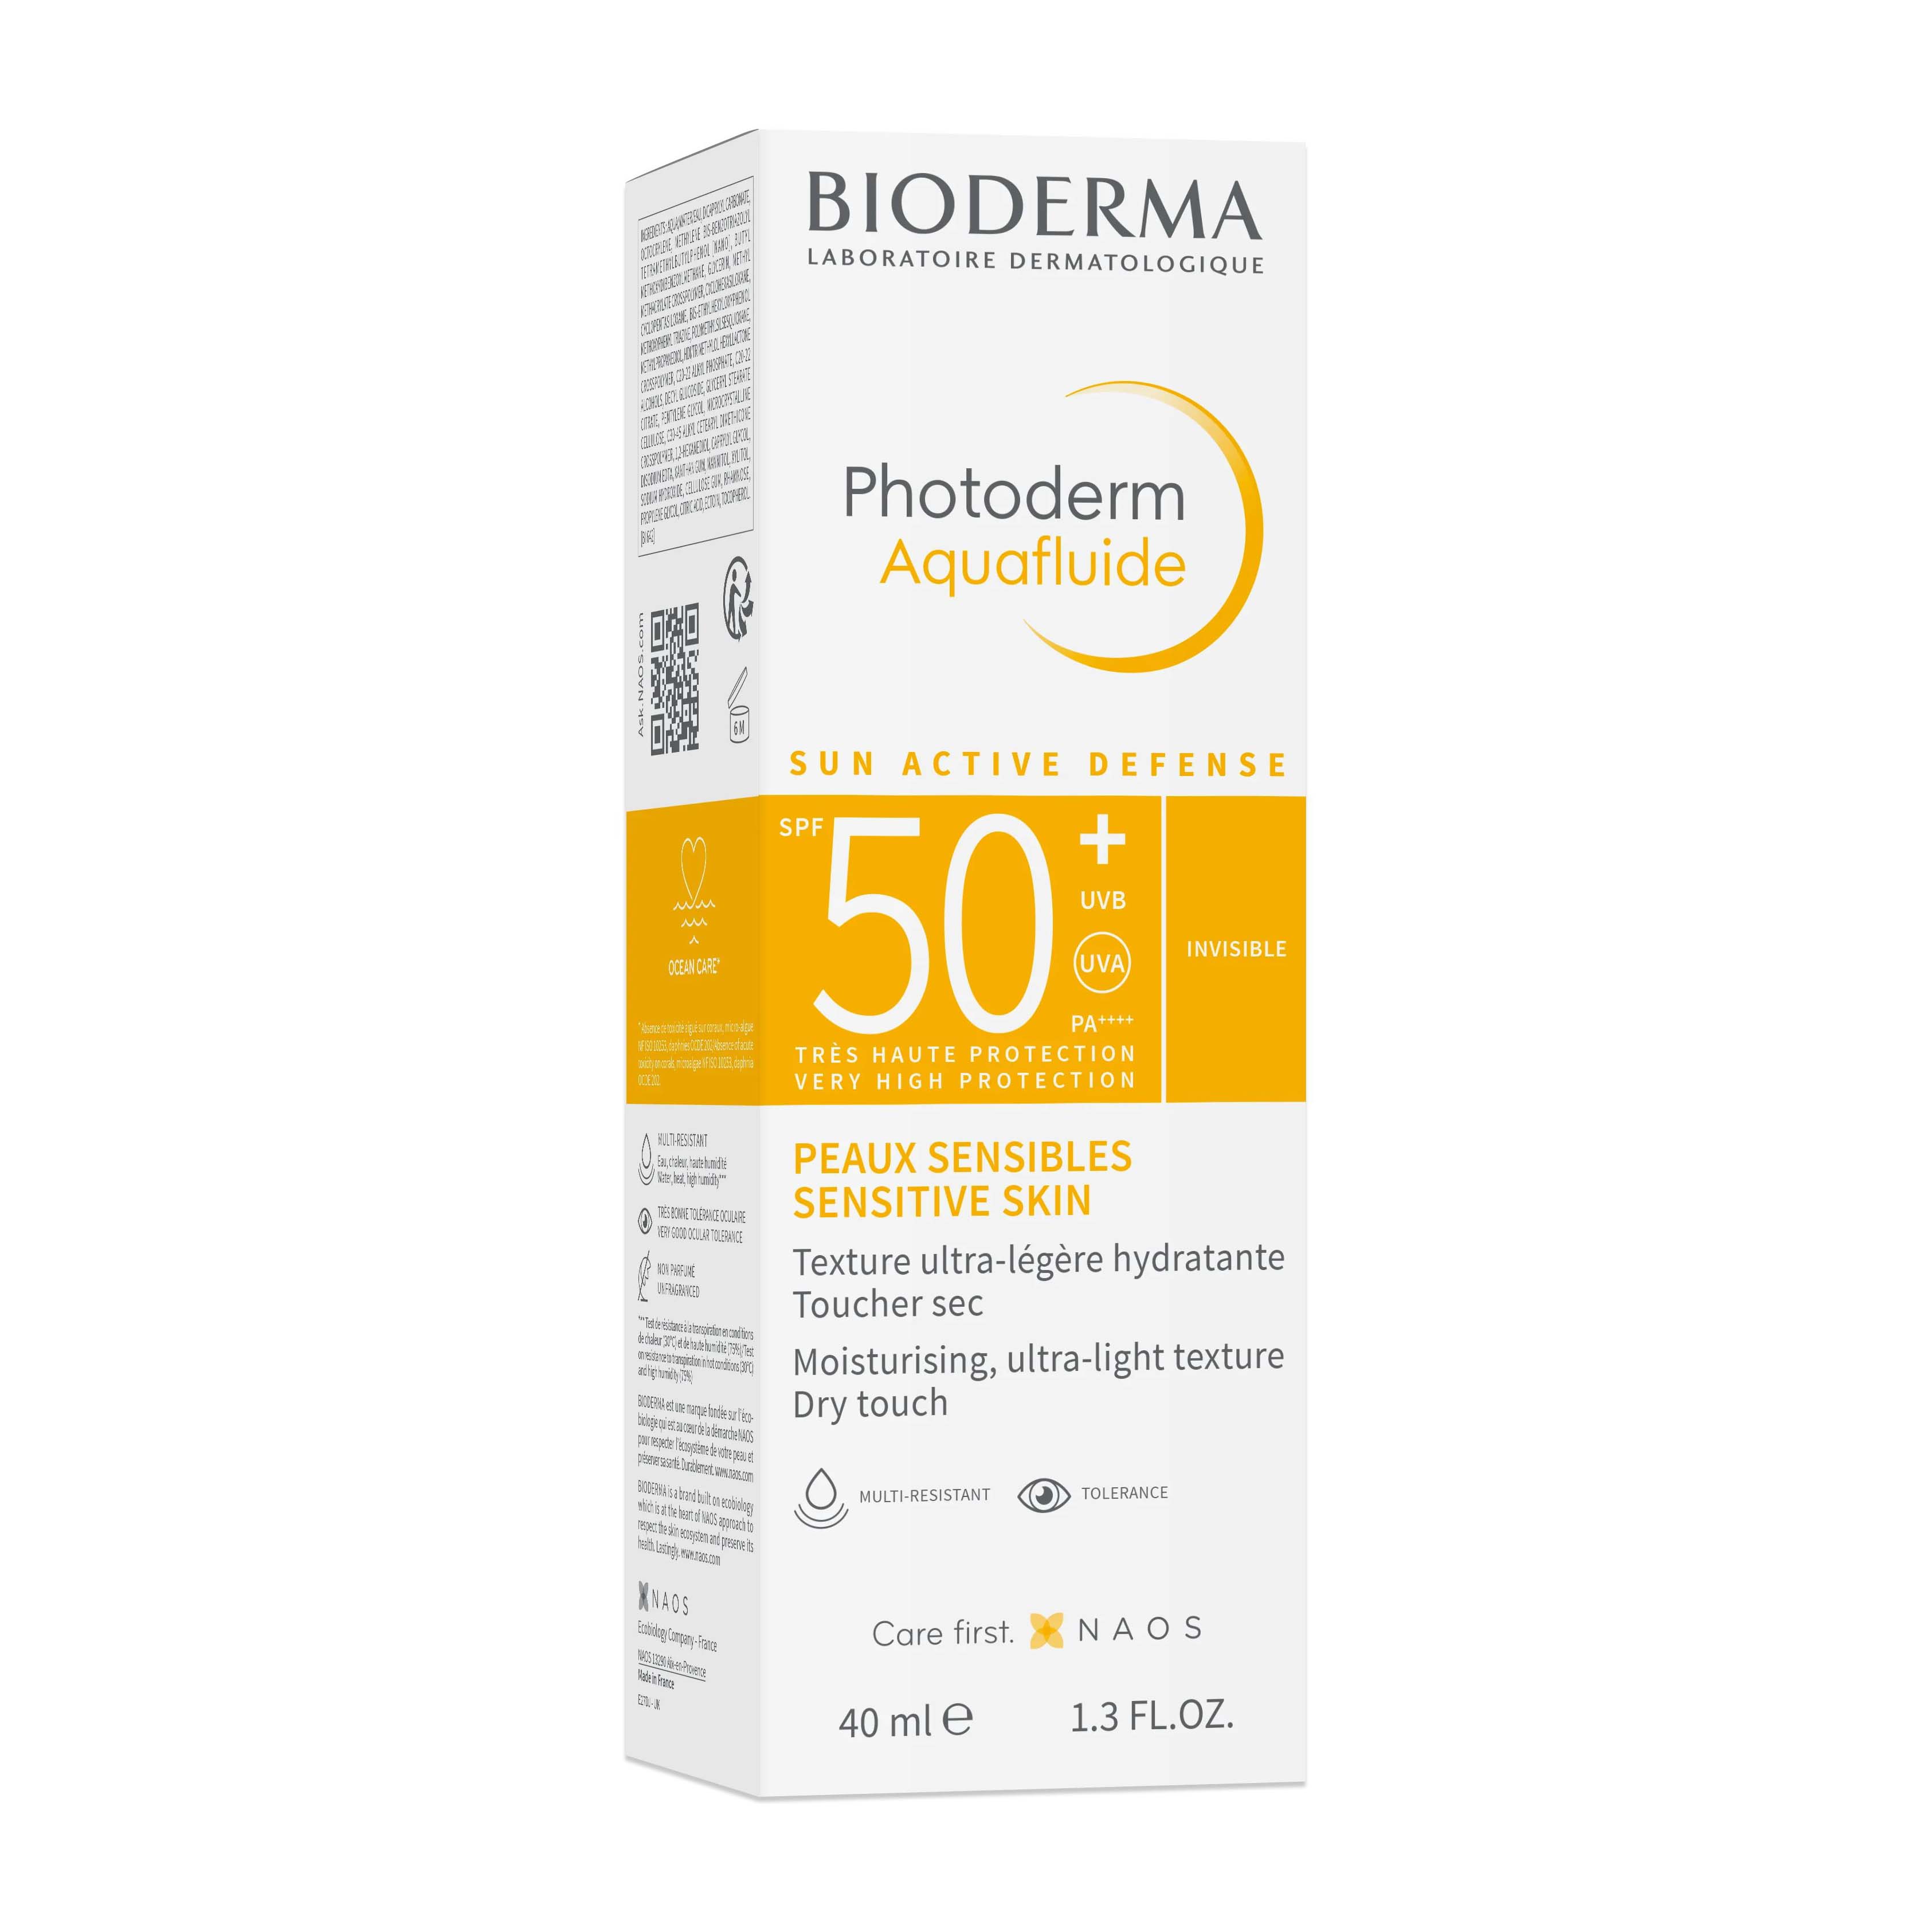 Bioderma Photoderm Aquafluide SPF 50+ Sunscreen - 40ml